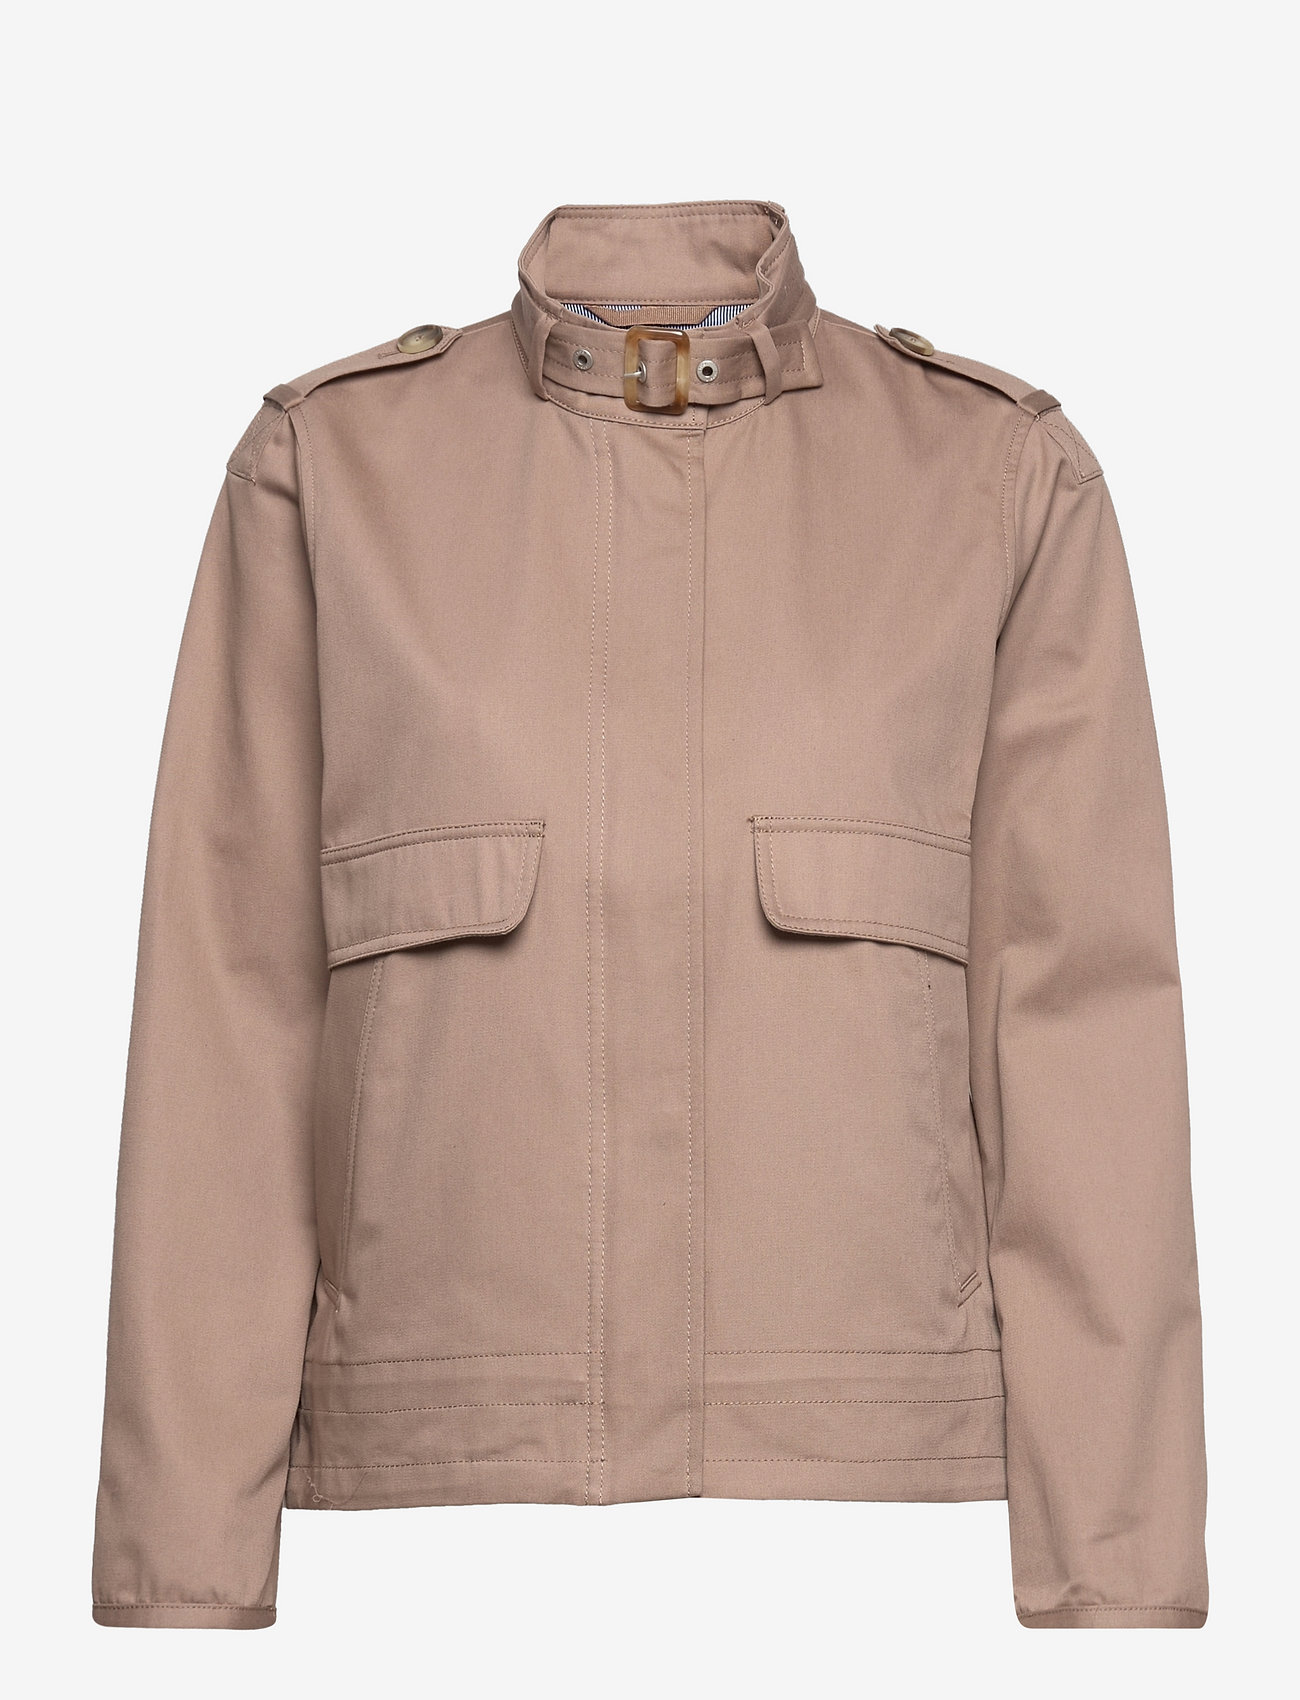 Esprit Casual - Outdoor jacket - darba stila jakas - taupe - 0